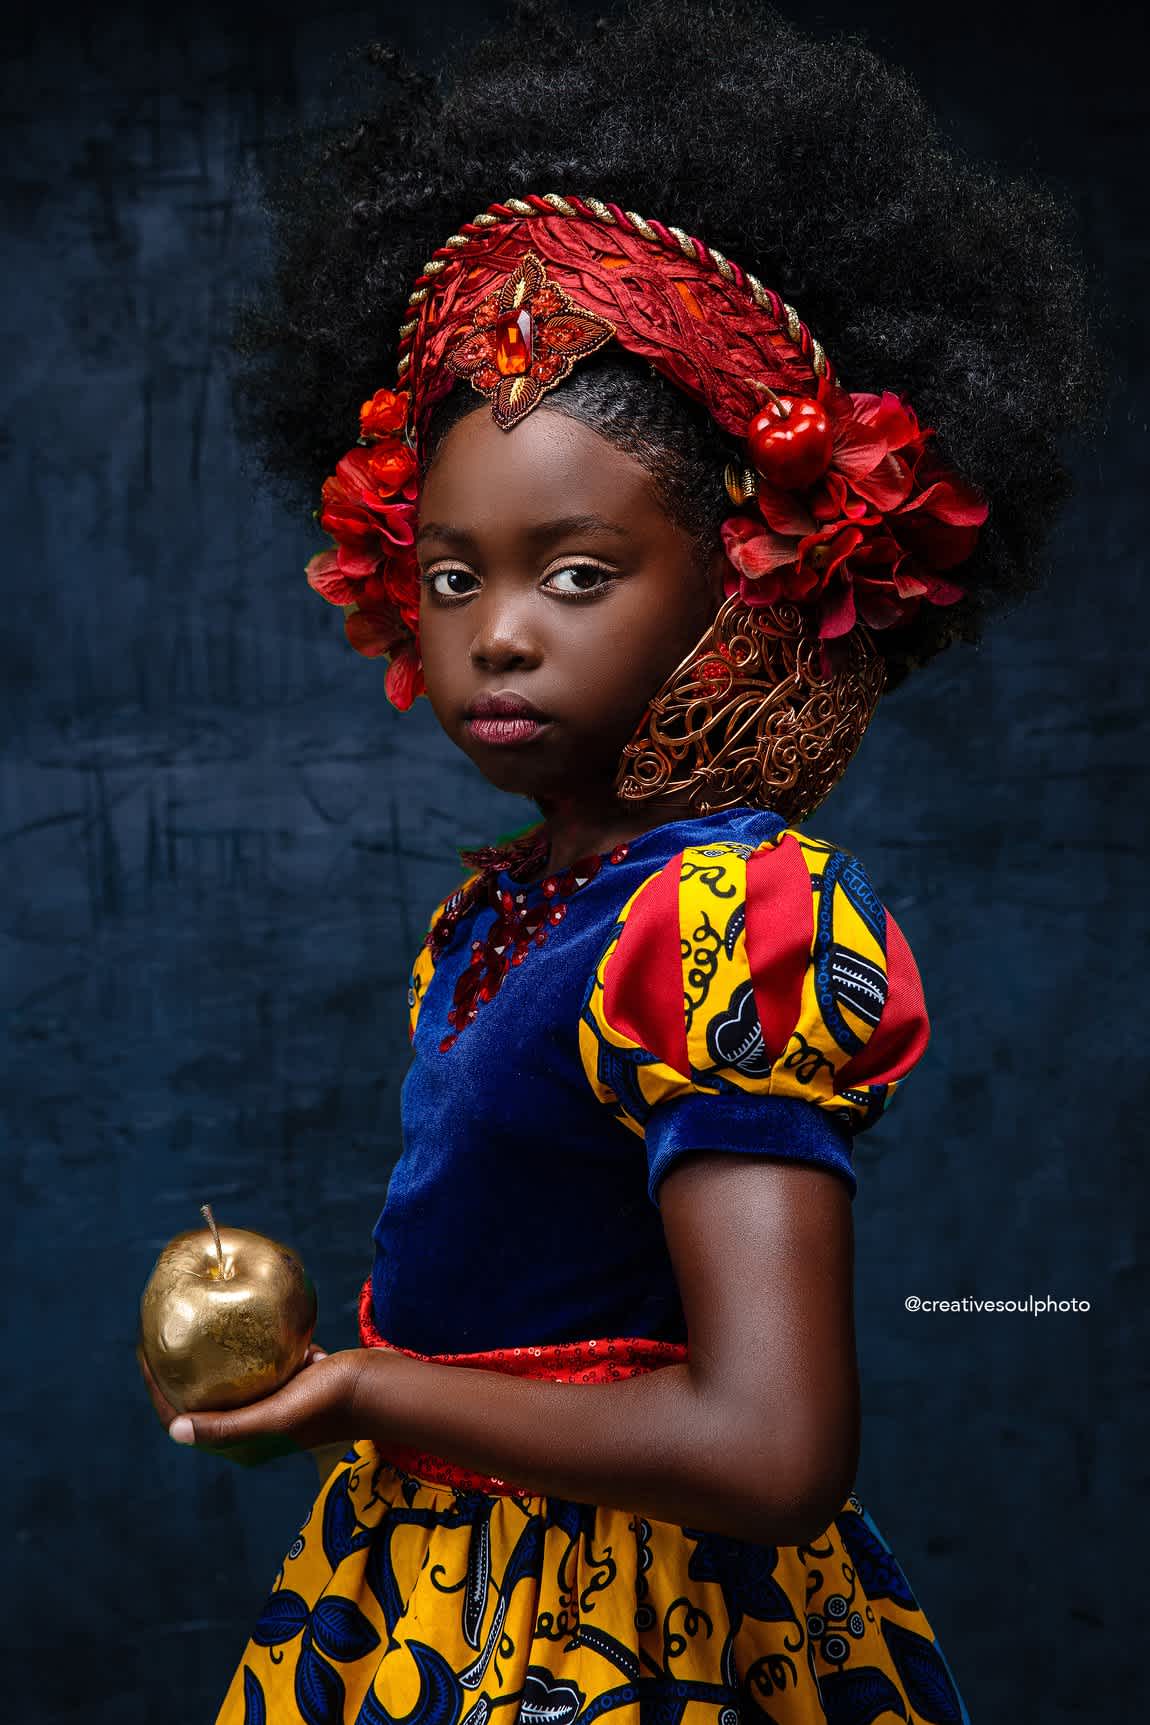 Photo Series Reimagines Classic Fairy Tales Through the Eyes of Fierce Black Princesses | Mom.com